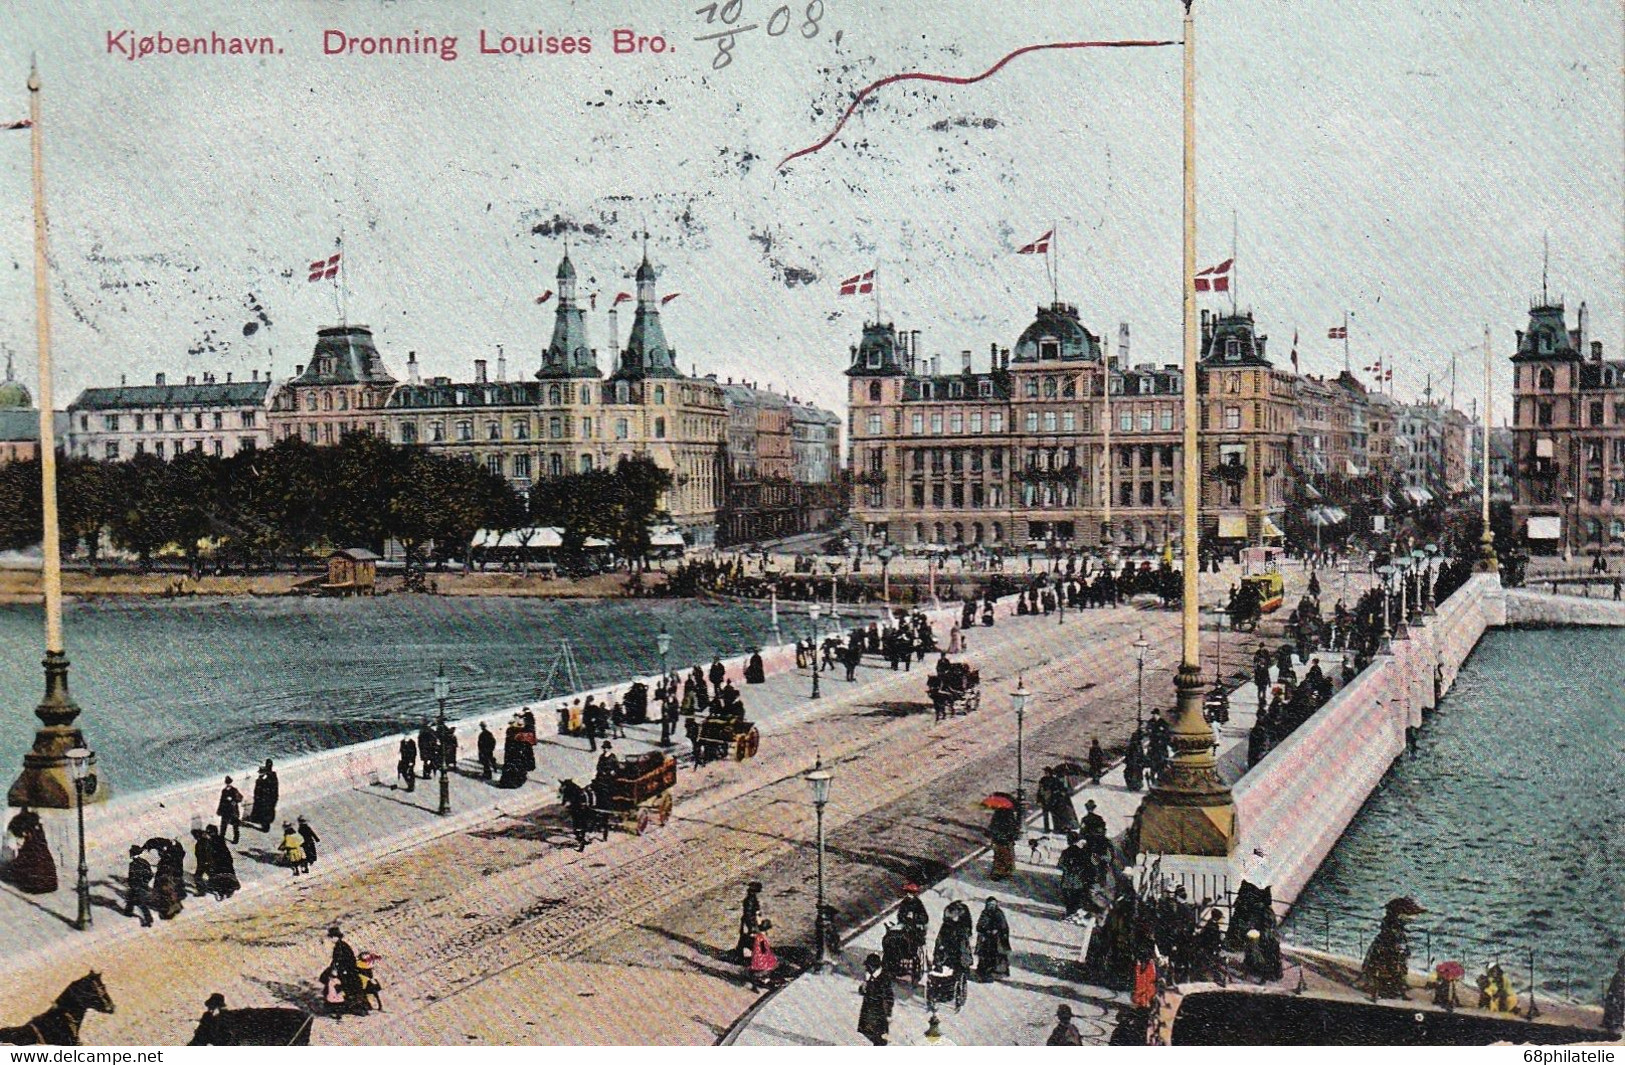 DANEMARK 1908 CARTE POSTALE DE COPENHAGUE - Covers & Documents